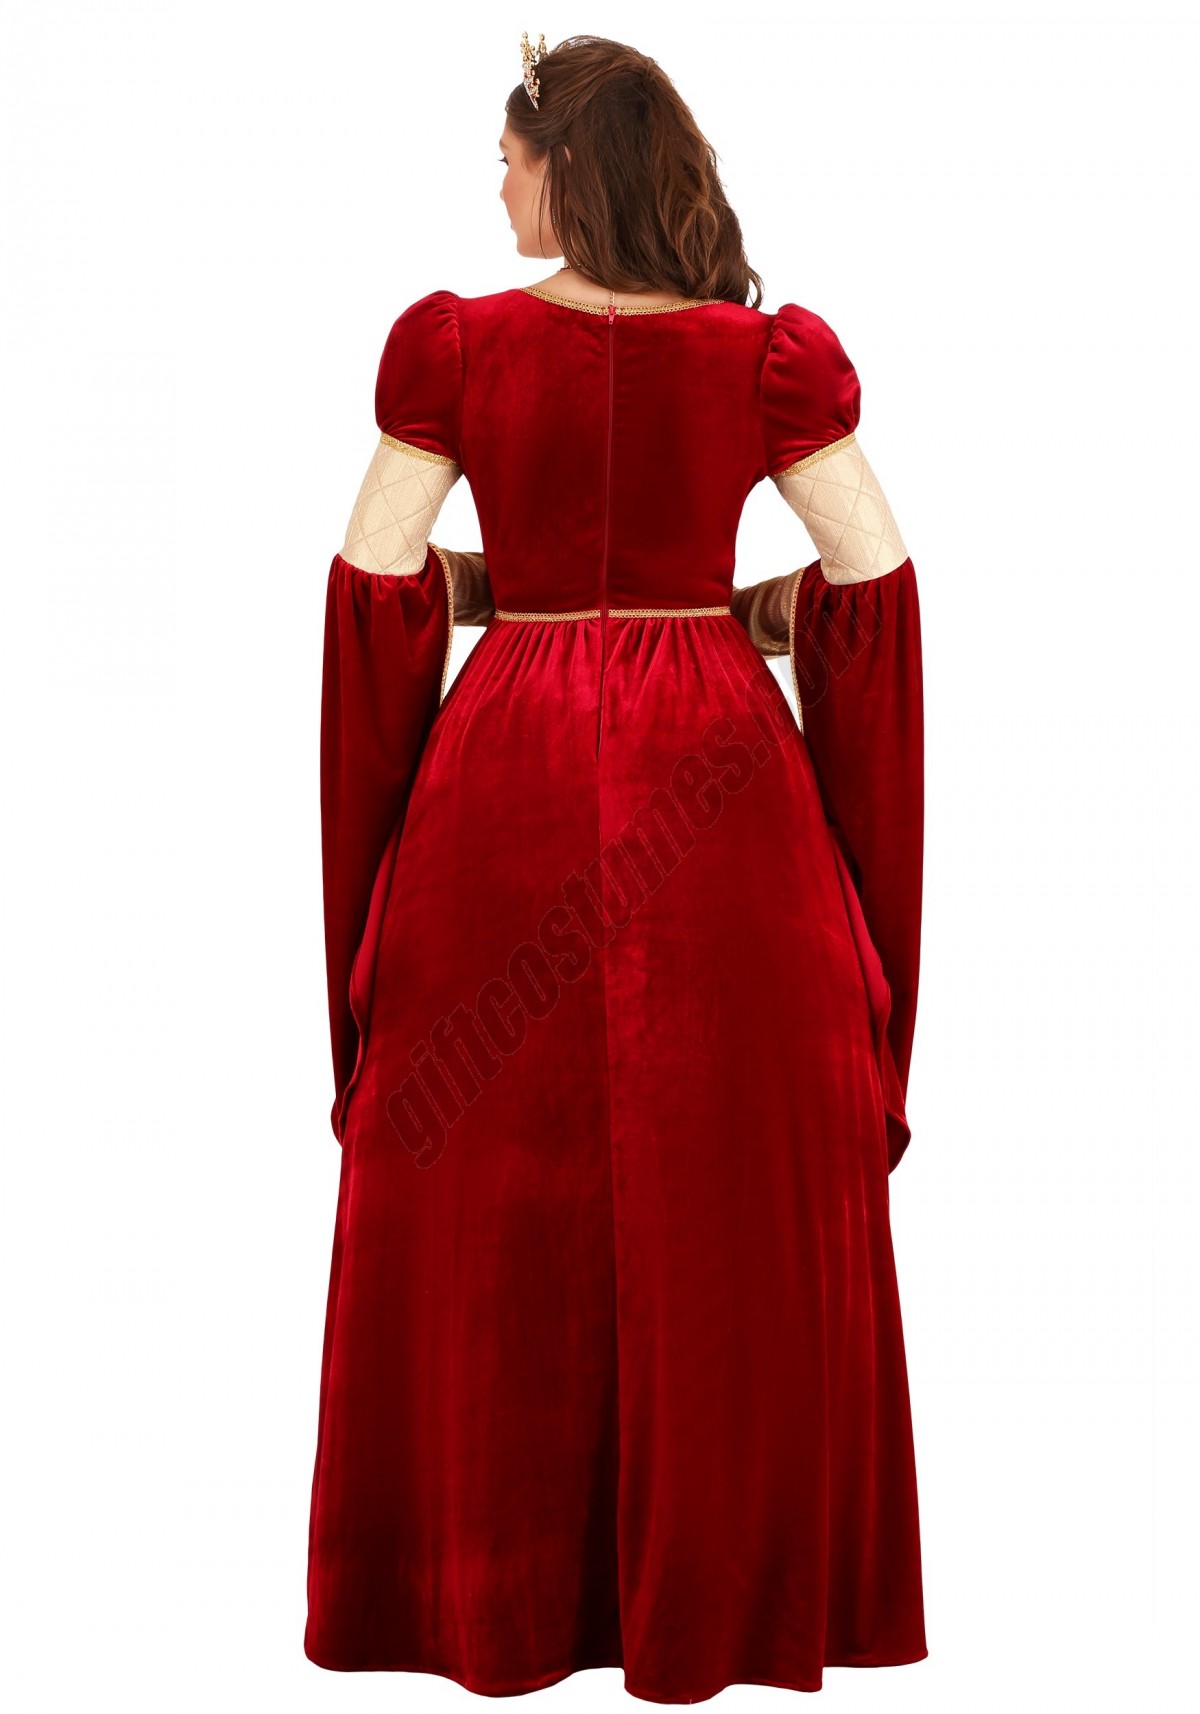 Regal Renaissance Queen Costume for Women - -1